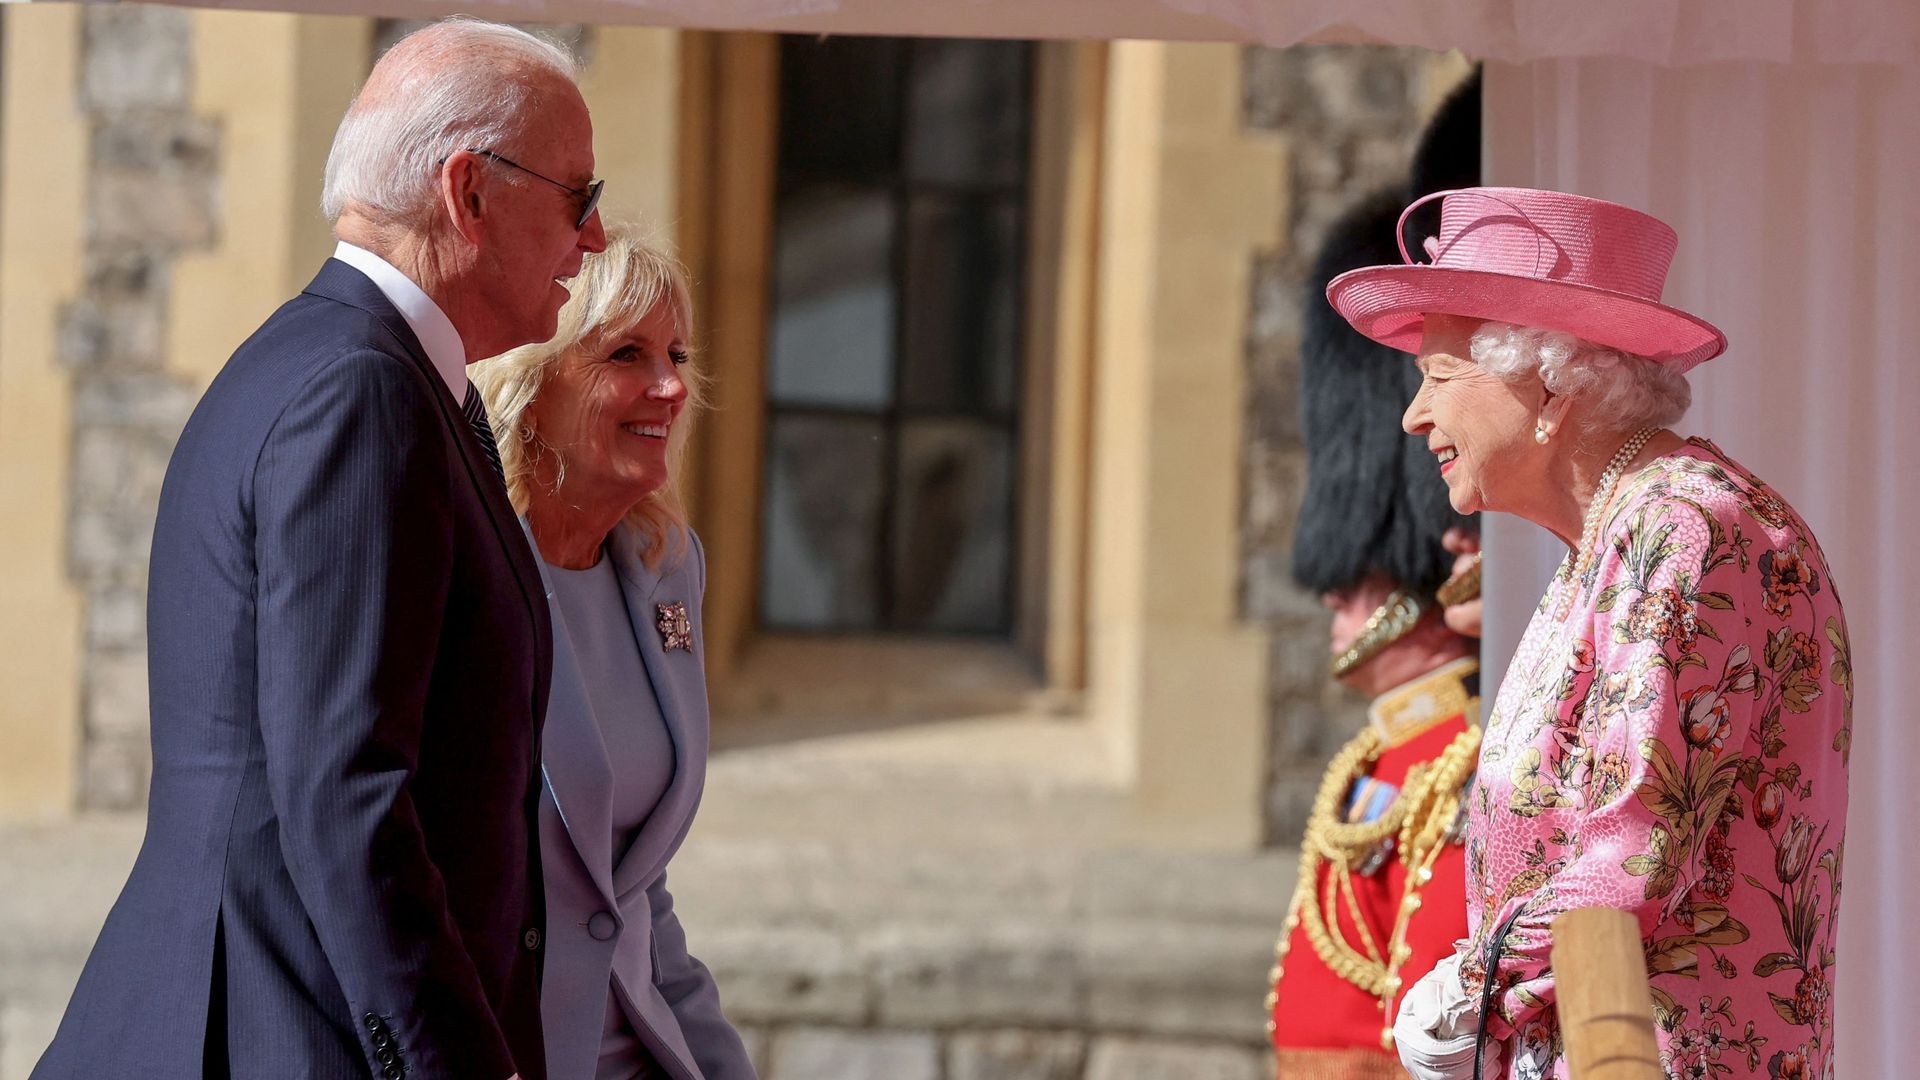 President Biden and first lady Jill Biden are seen greeting Queen Elizabeth II at Windsor Castle.